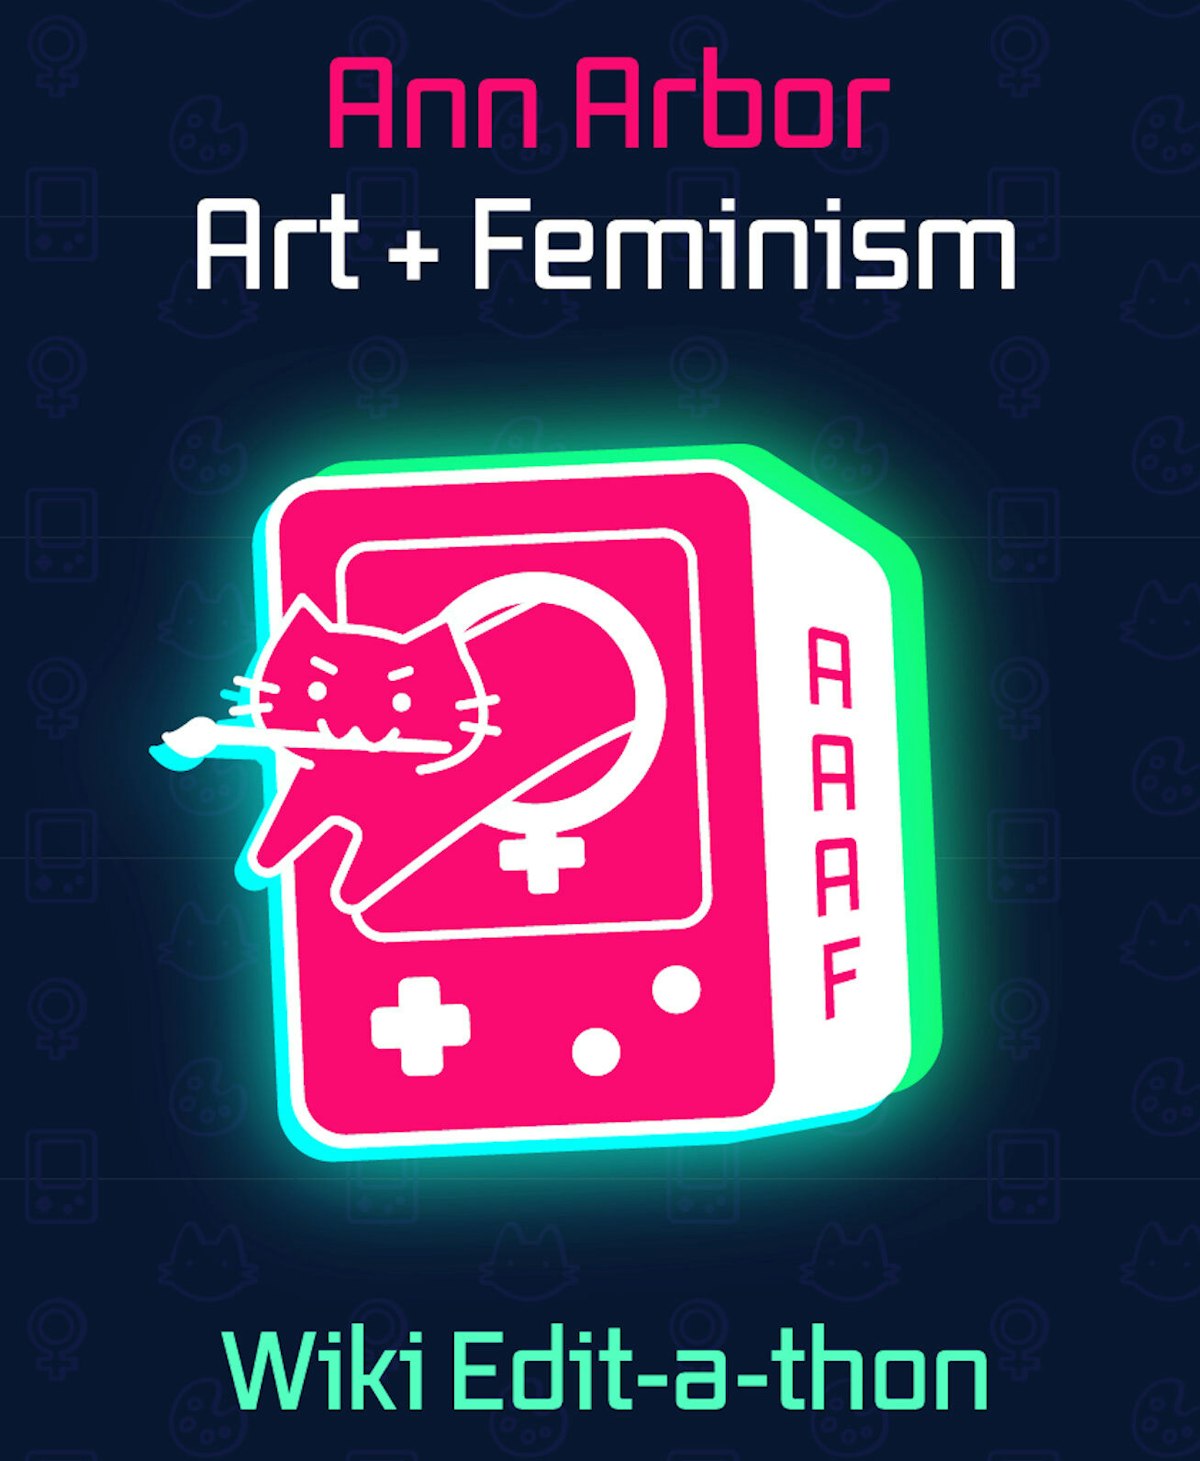 Ann Arbor Art + Feminism 2023 Wikipedia Edit-a-thon, 6/17/2023